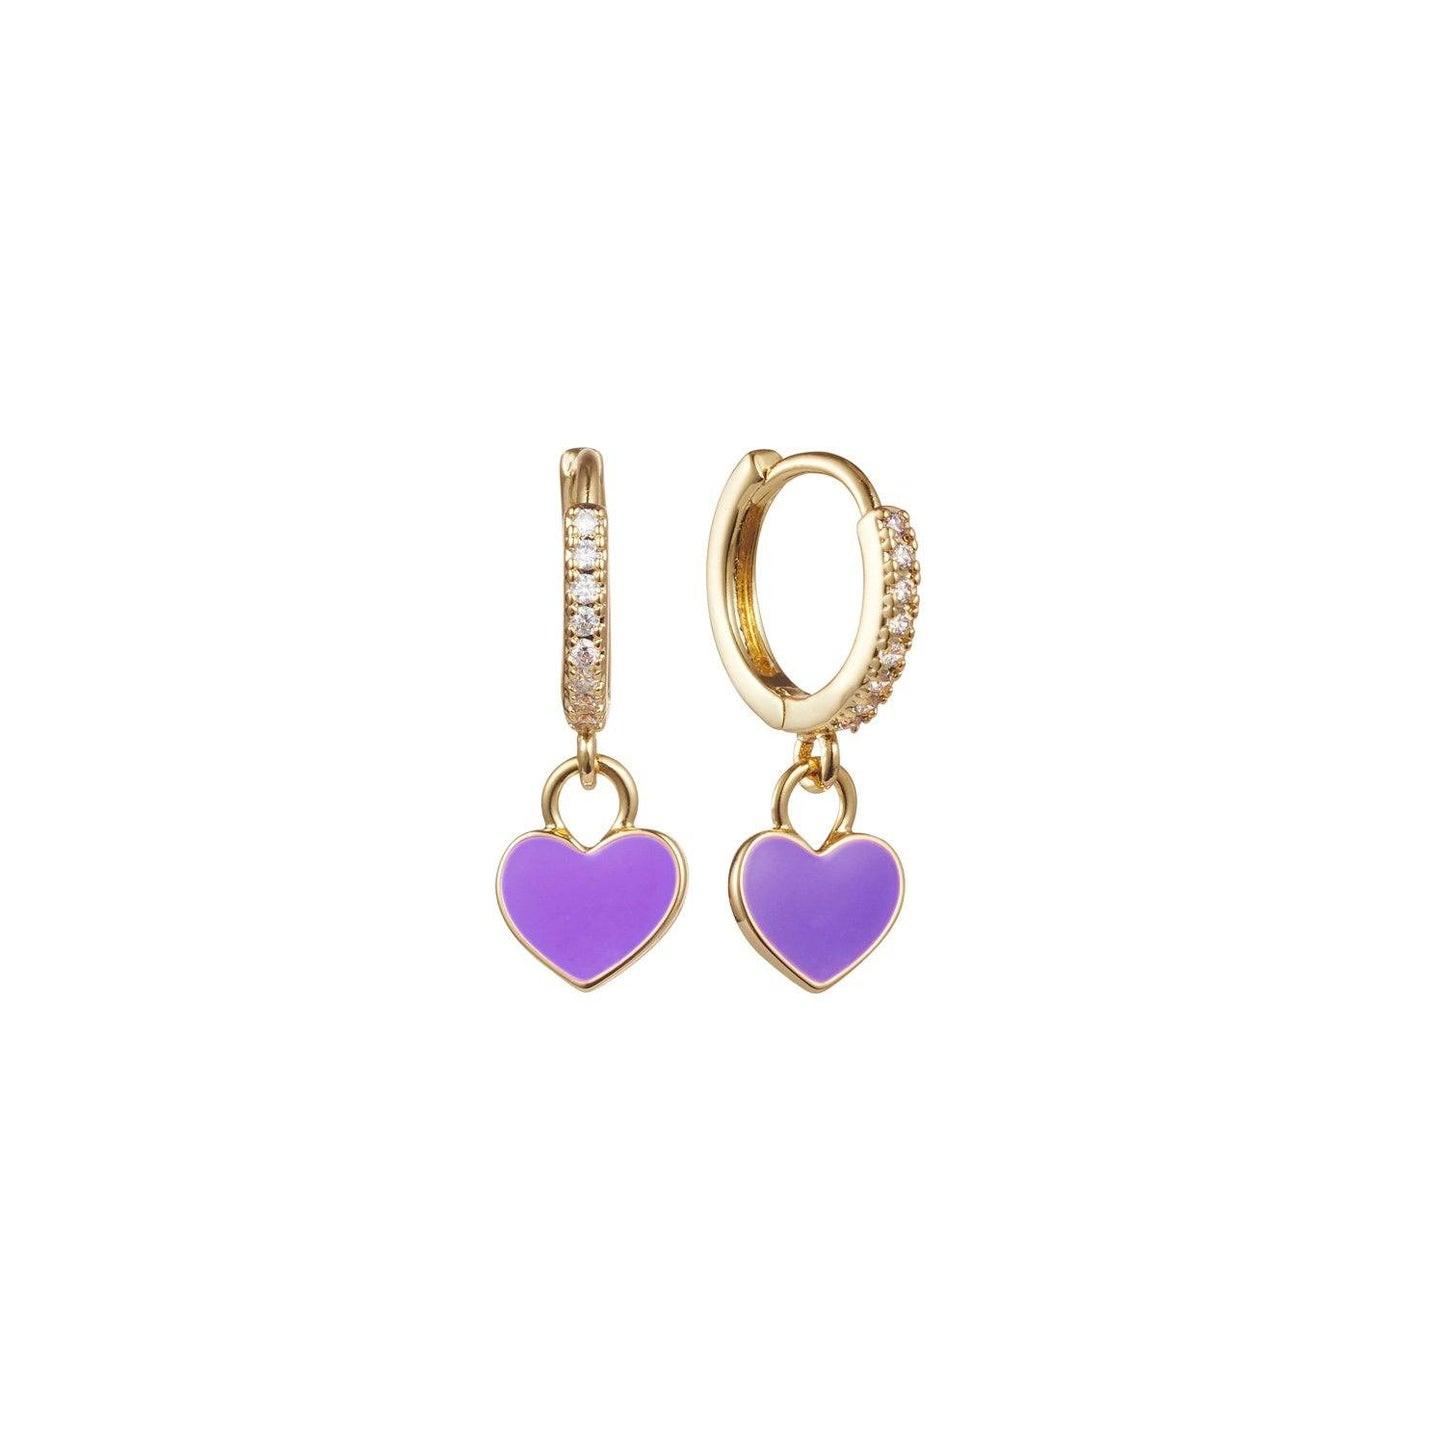 Small gold hoops with purple enamel heart pendant